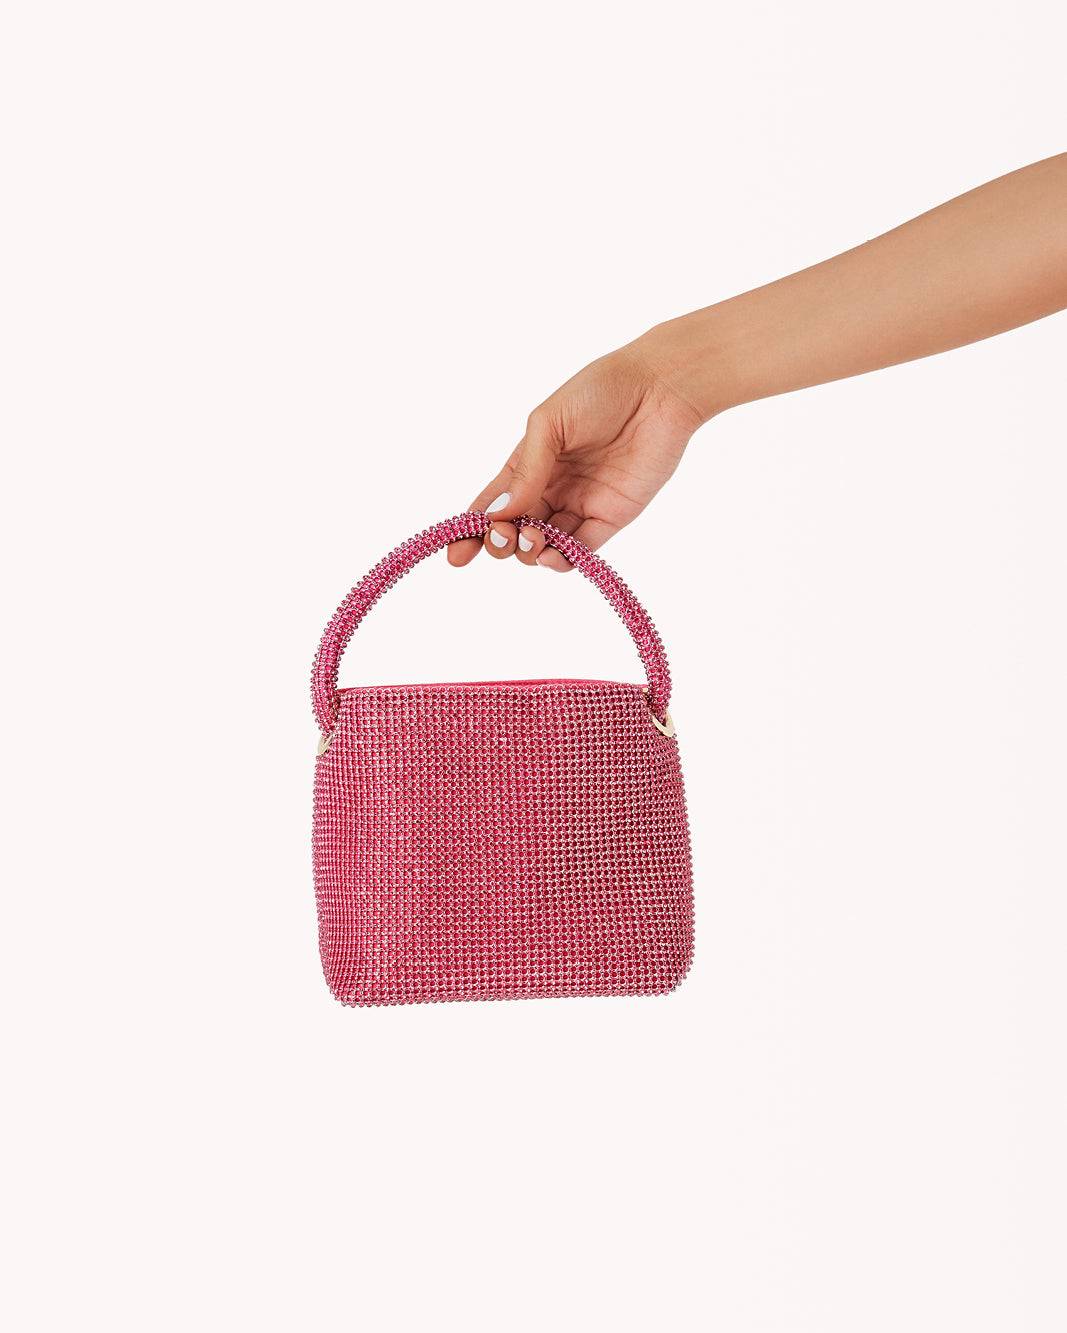 TANI HANDLE BAG - PINK DIAMANTE - PINK-Handbags-Billini-O/S-BILLINI USA